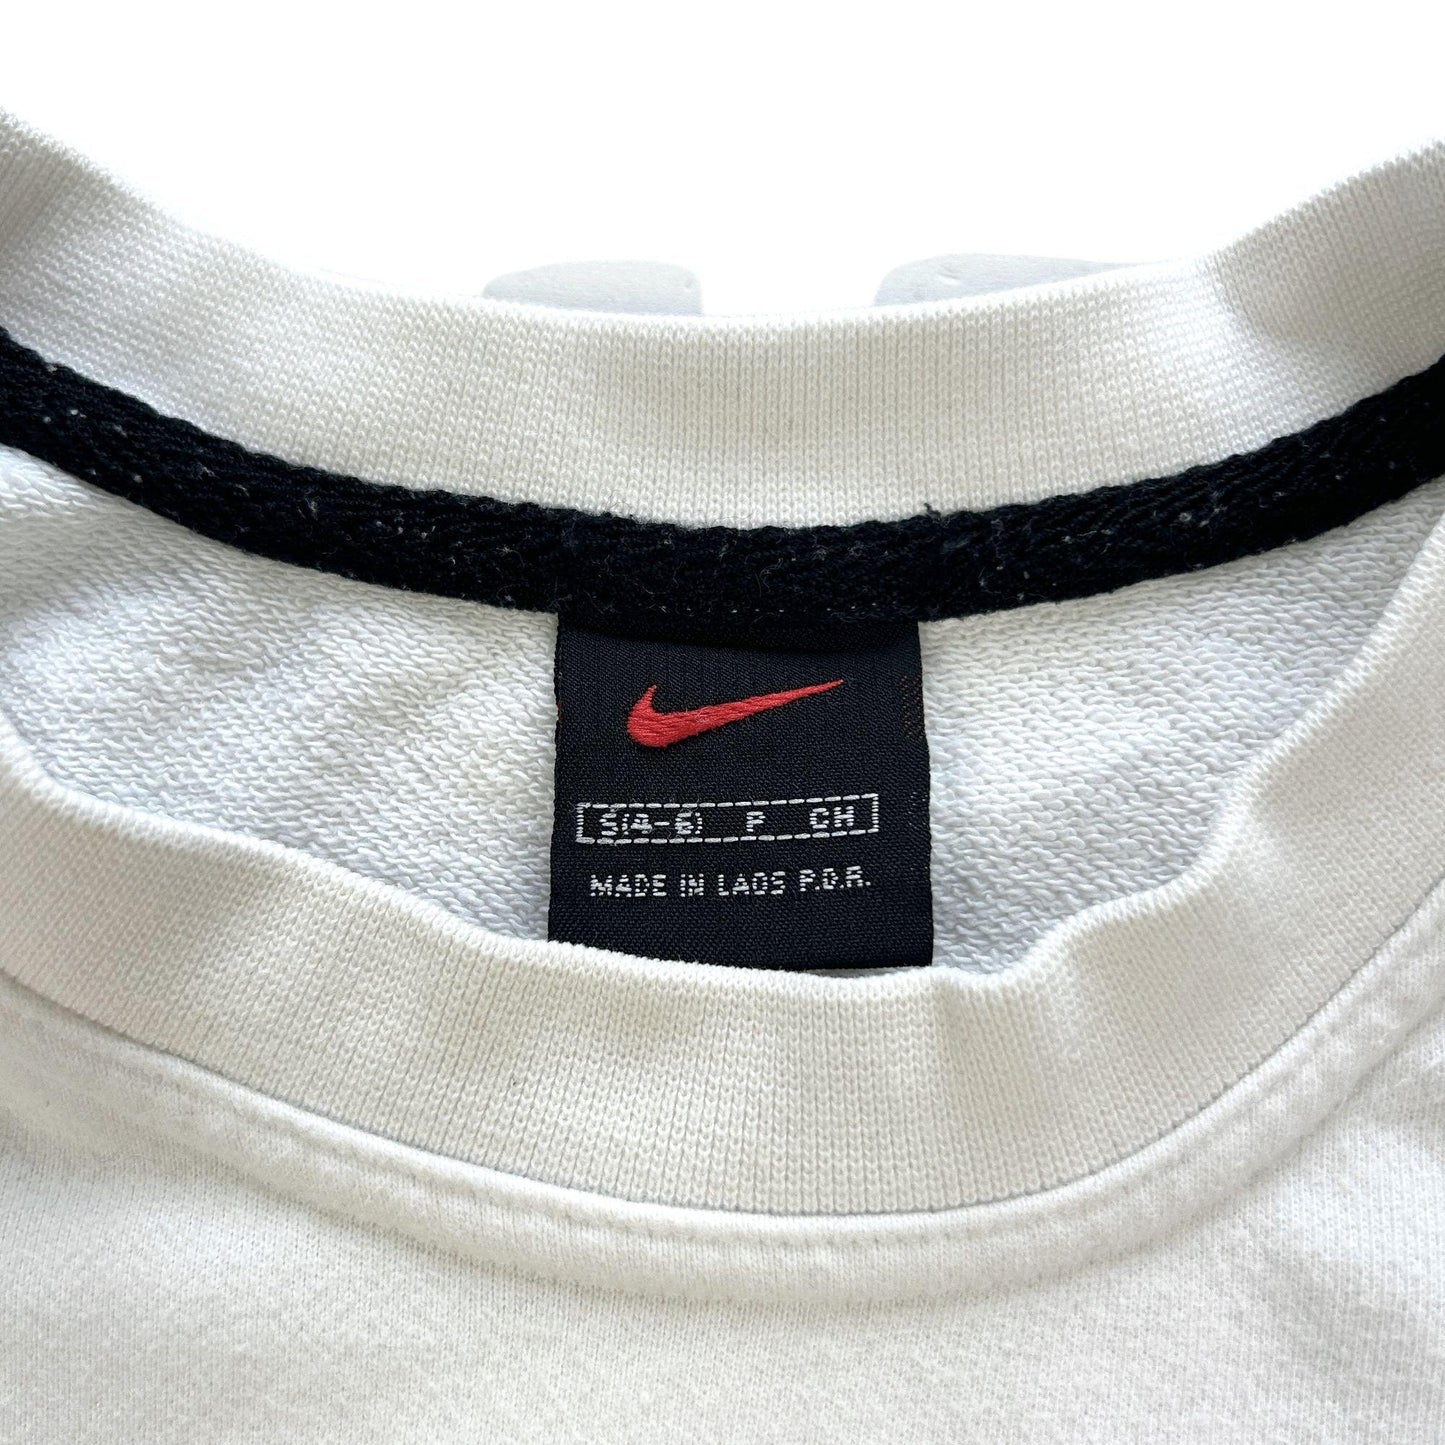 Vintage Nike Sweatshirt Woman's Size S - Known Source